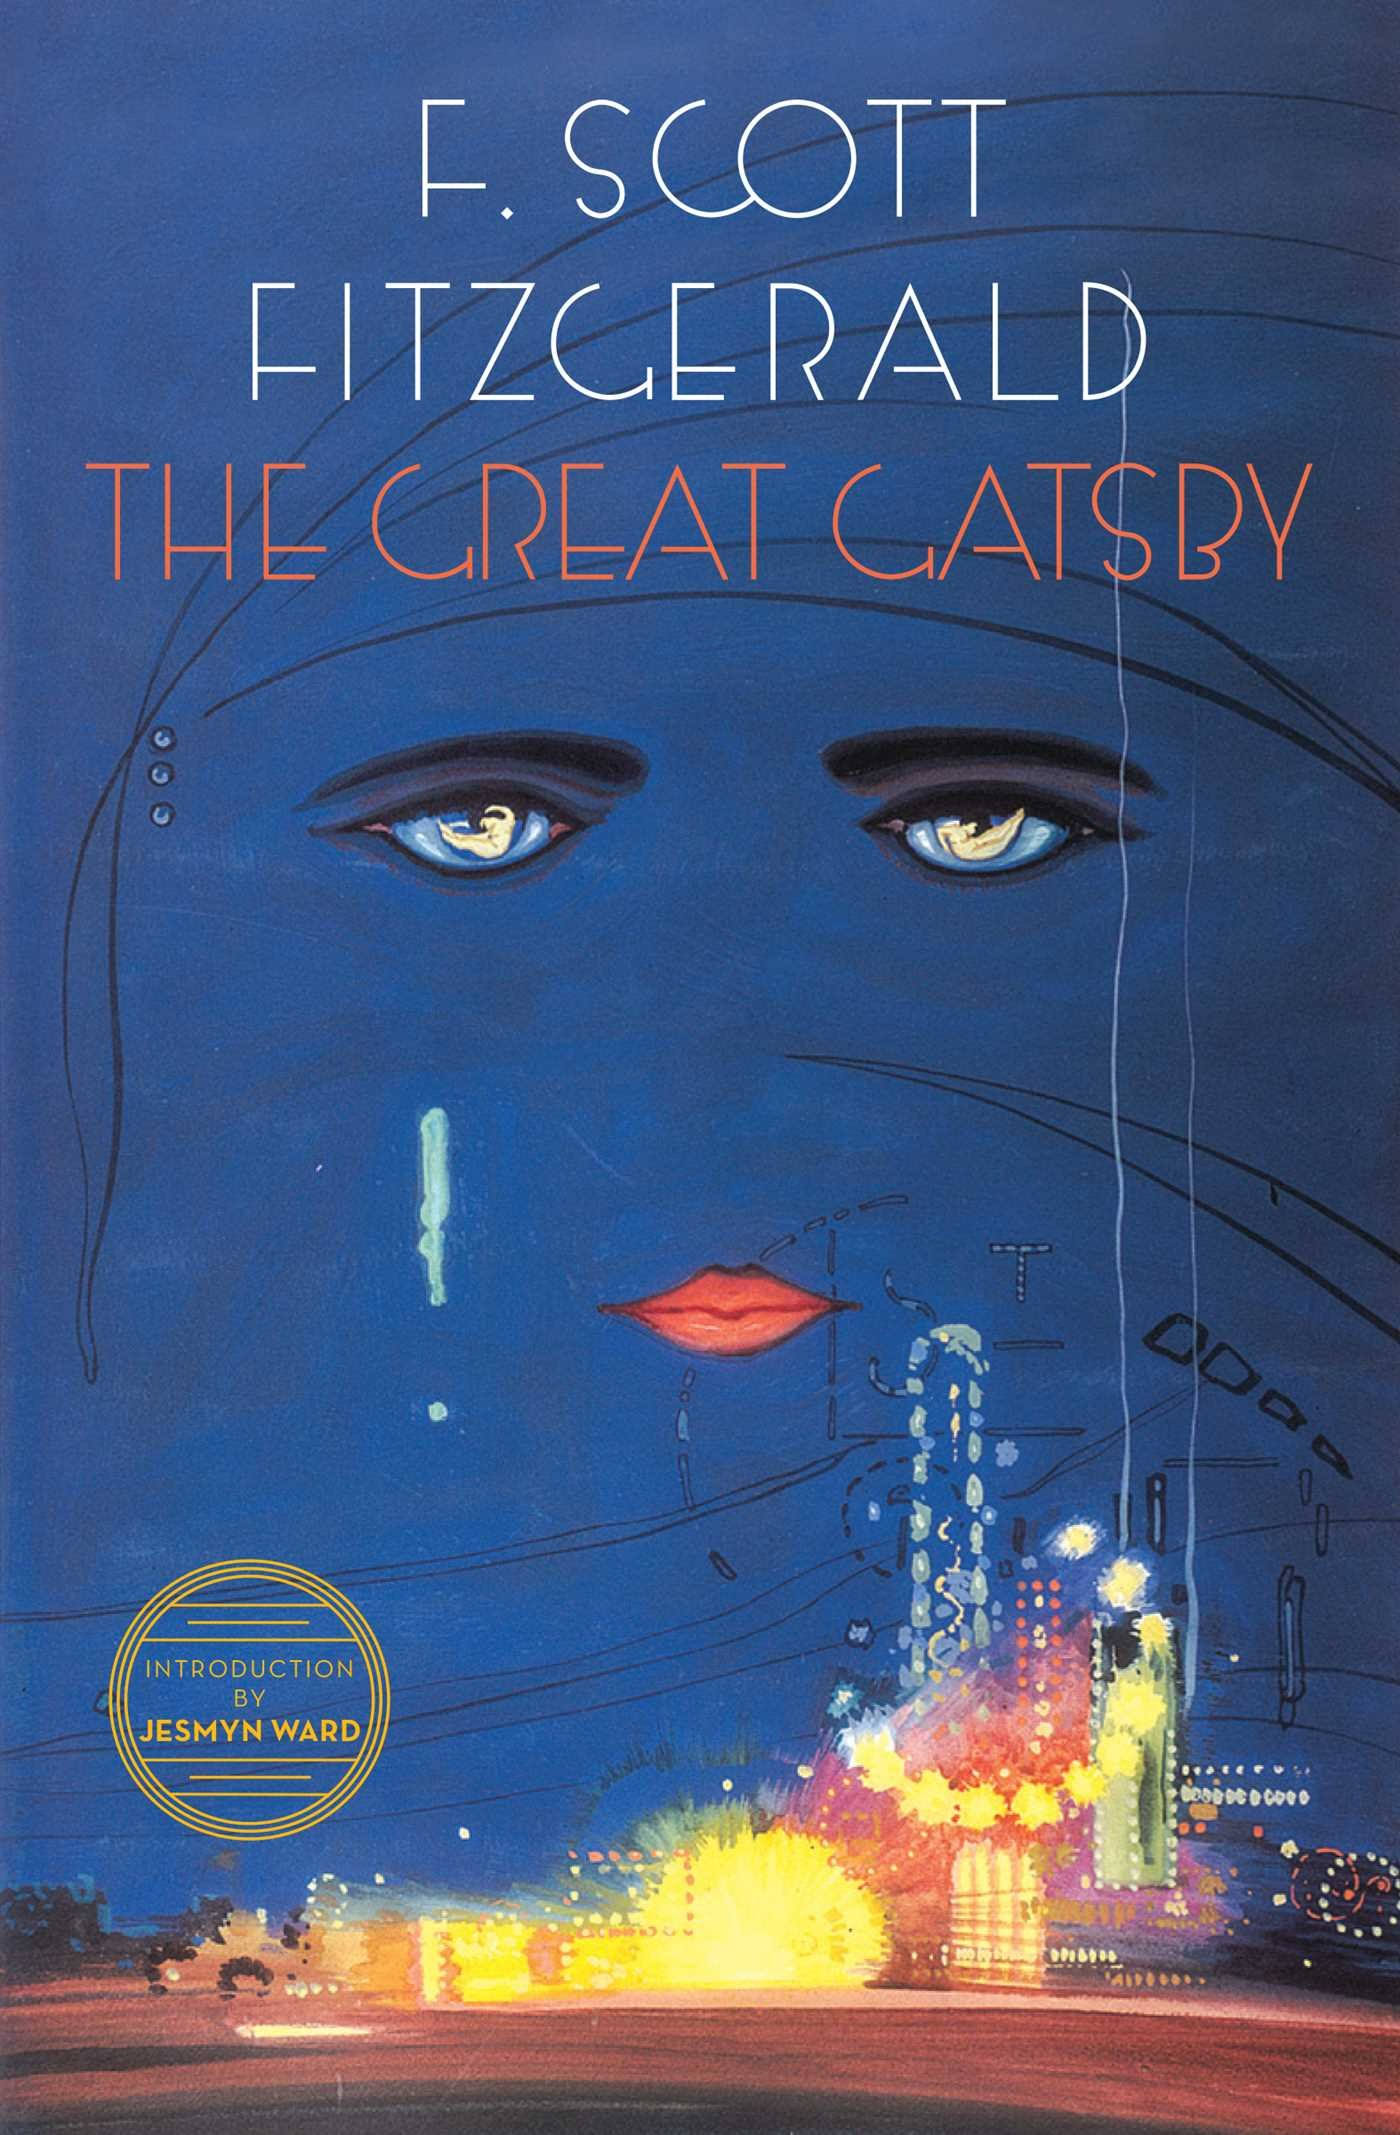 Great Gatsby The by F. Scott Fitzgerald